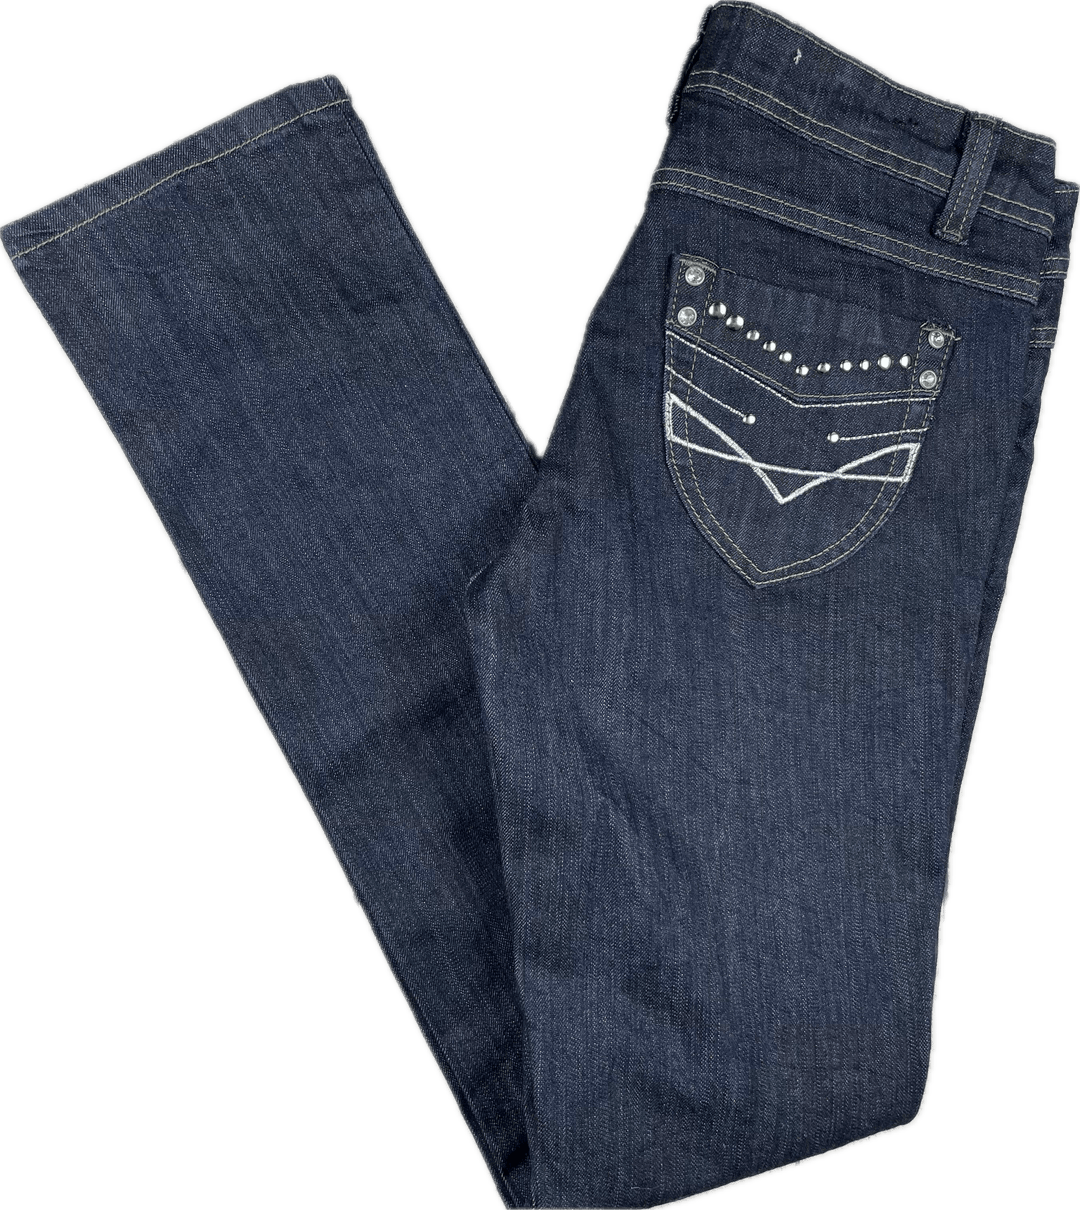 Yes Yes Jeans UK Low Waist Rhinestone Skinny Jeans - Size 10 - Jean Pool